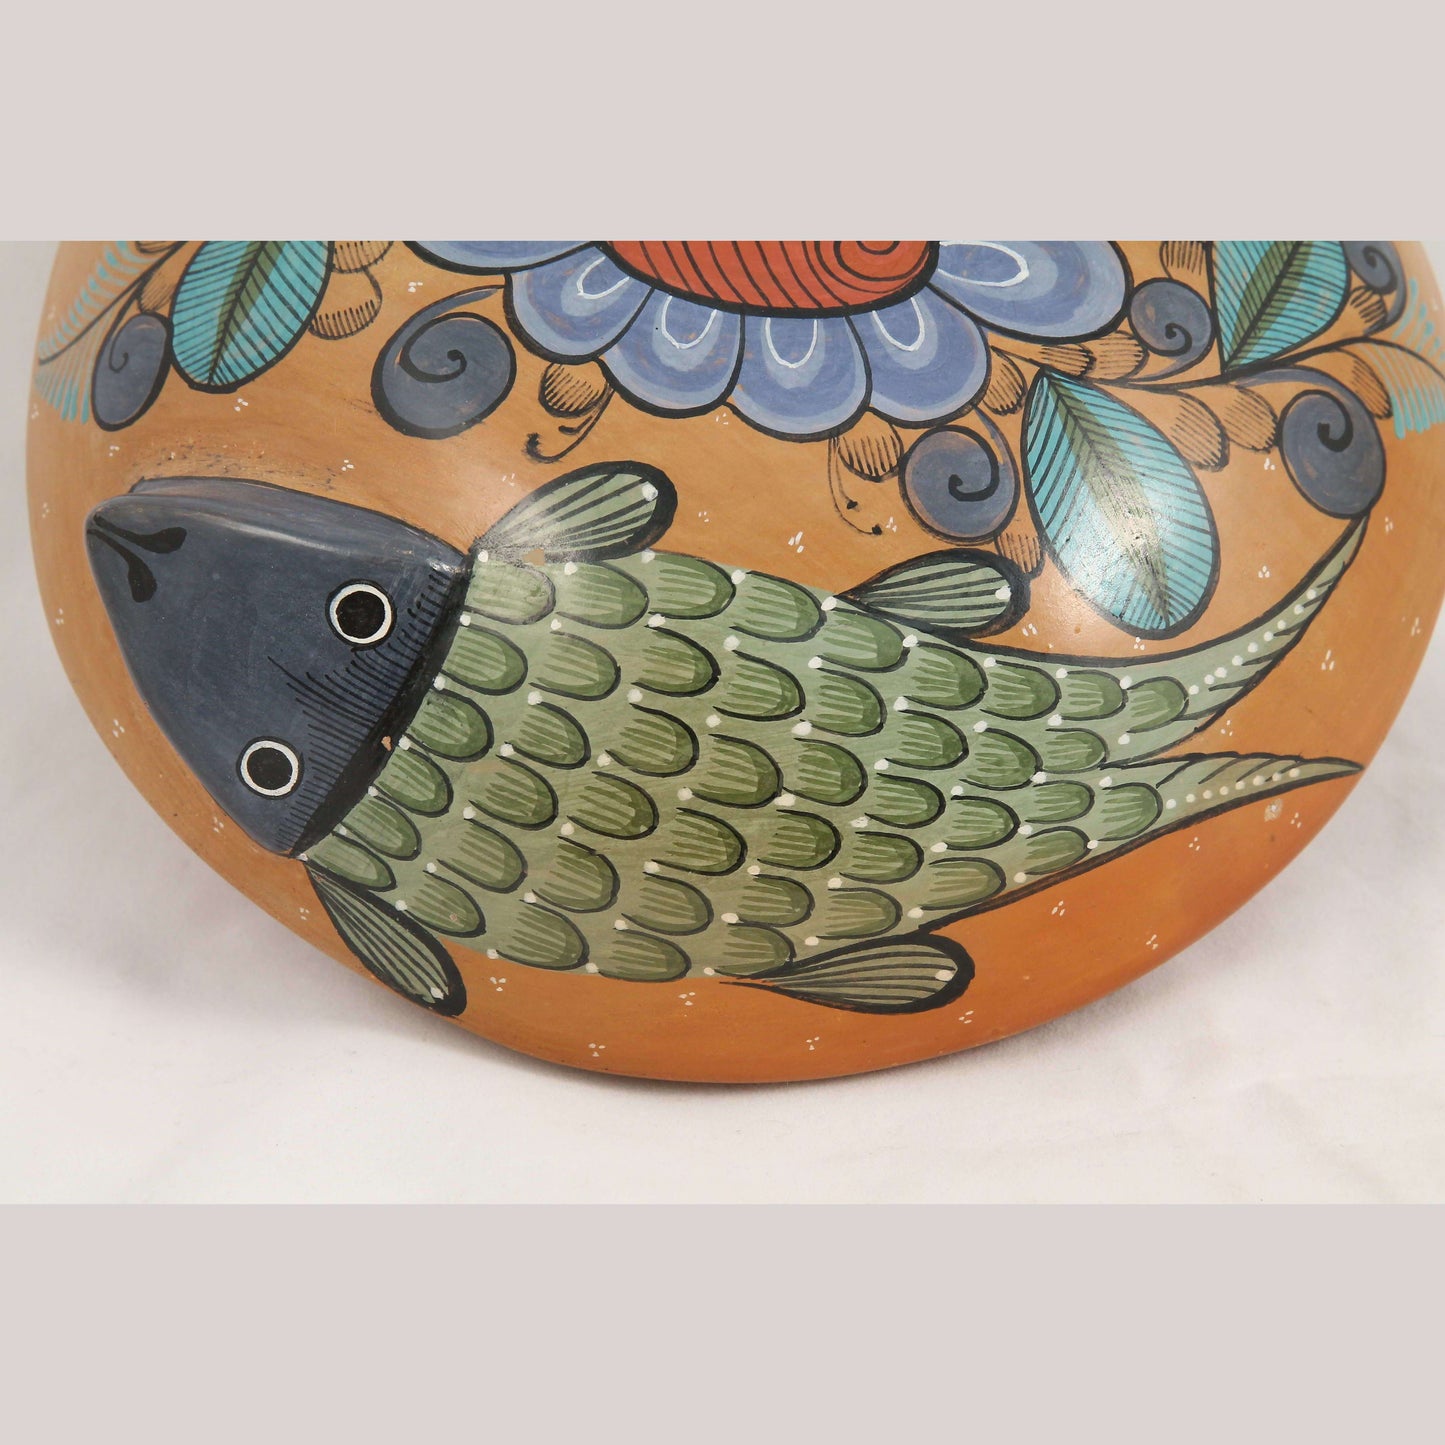 3 Footed Ceramic Vessel Mexico Fine Folk Art Master Jose Luis Cortez Green Fish